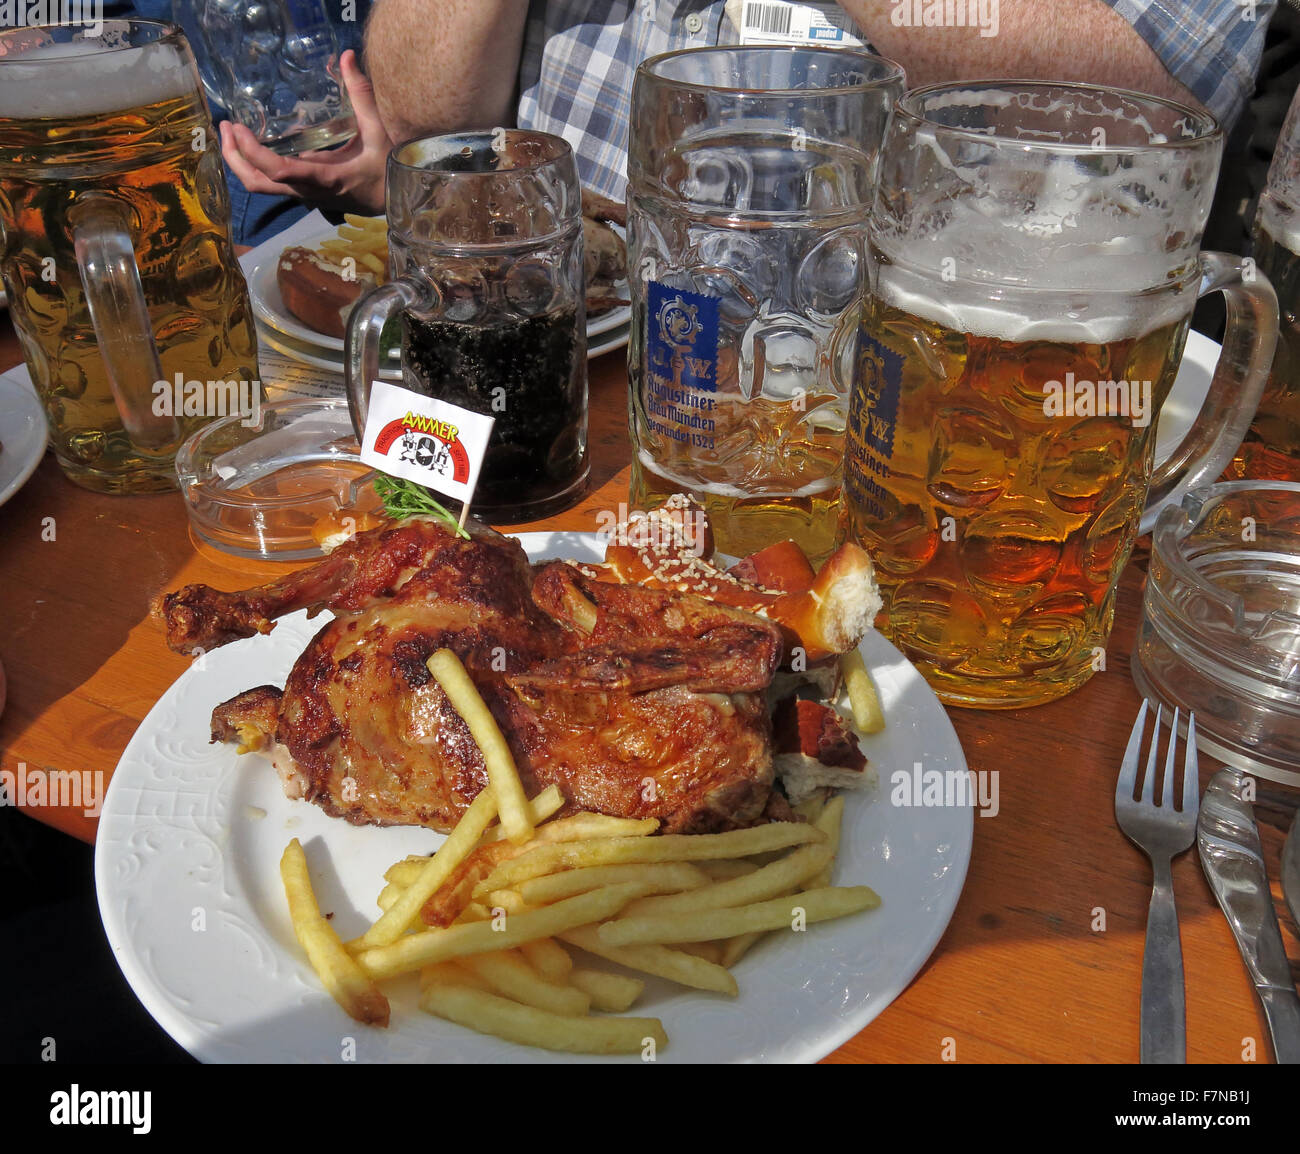 Oktoberfest beer steins and festival food, half chicken & fries, Munich, Germany Stock Photo